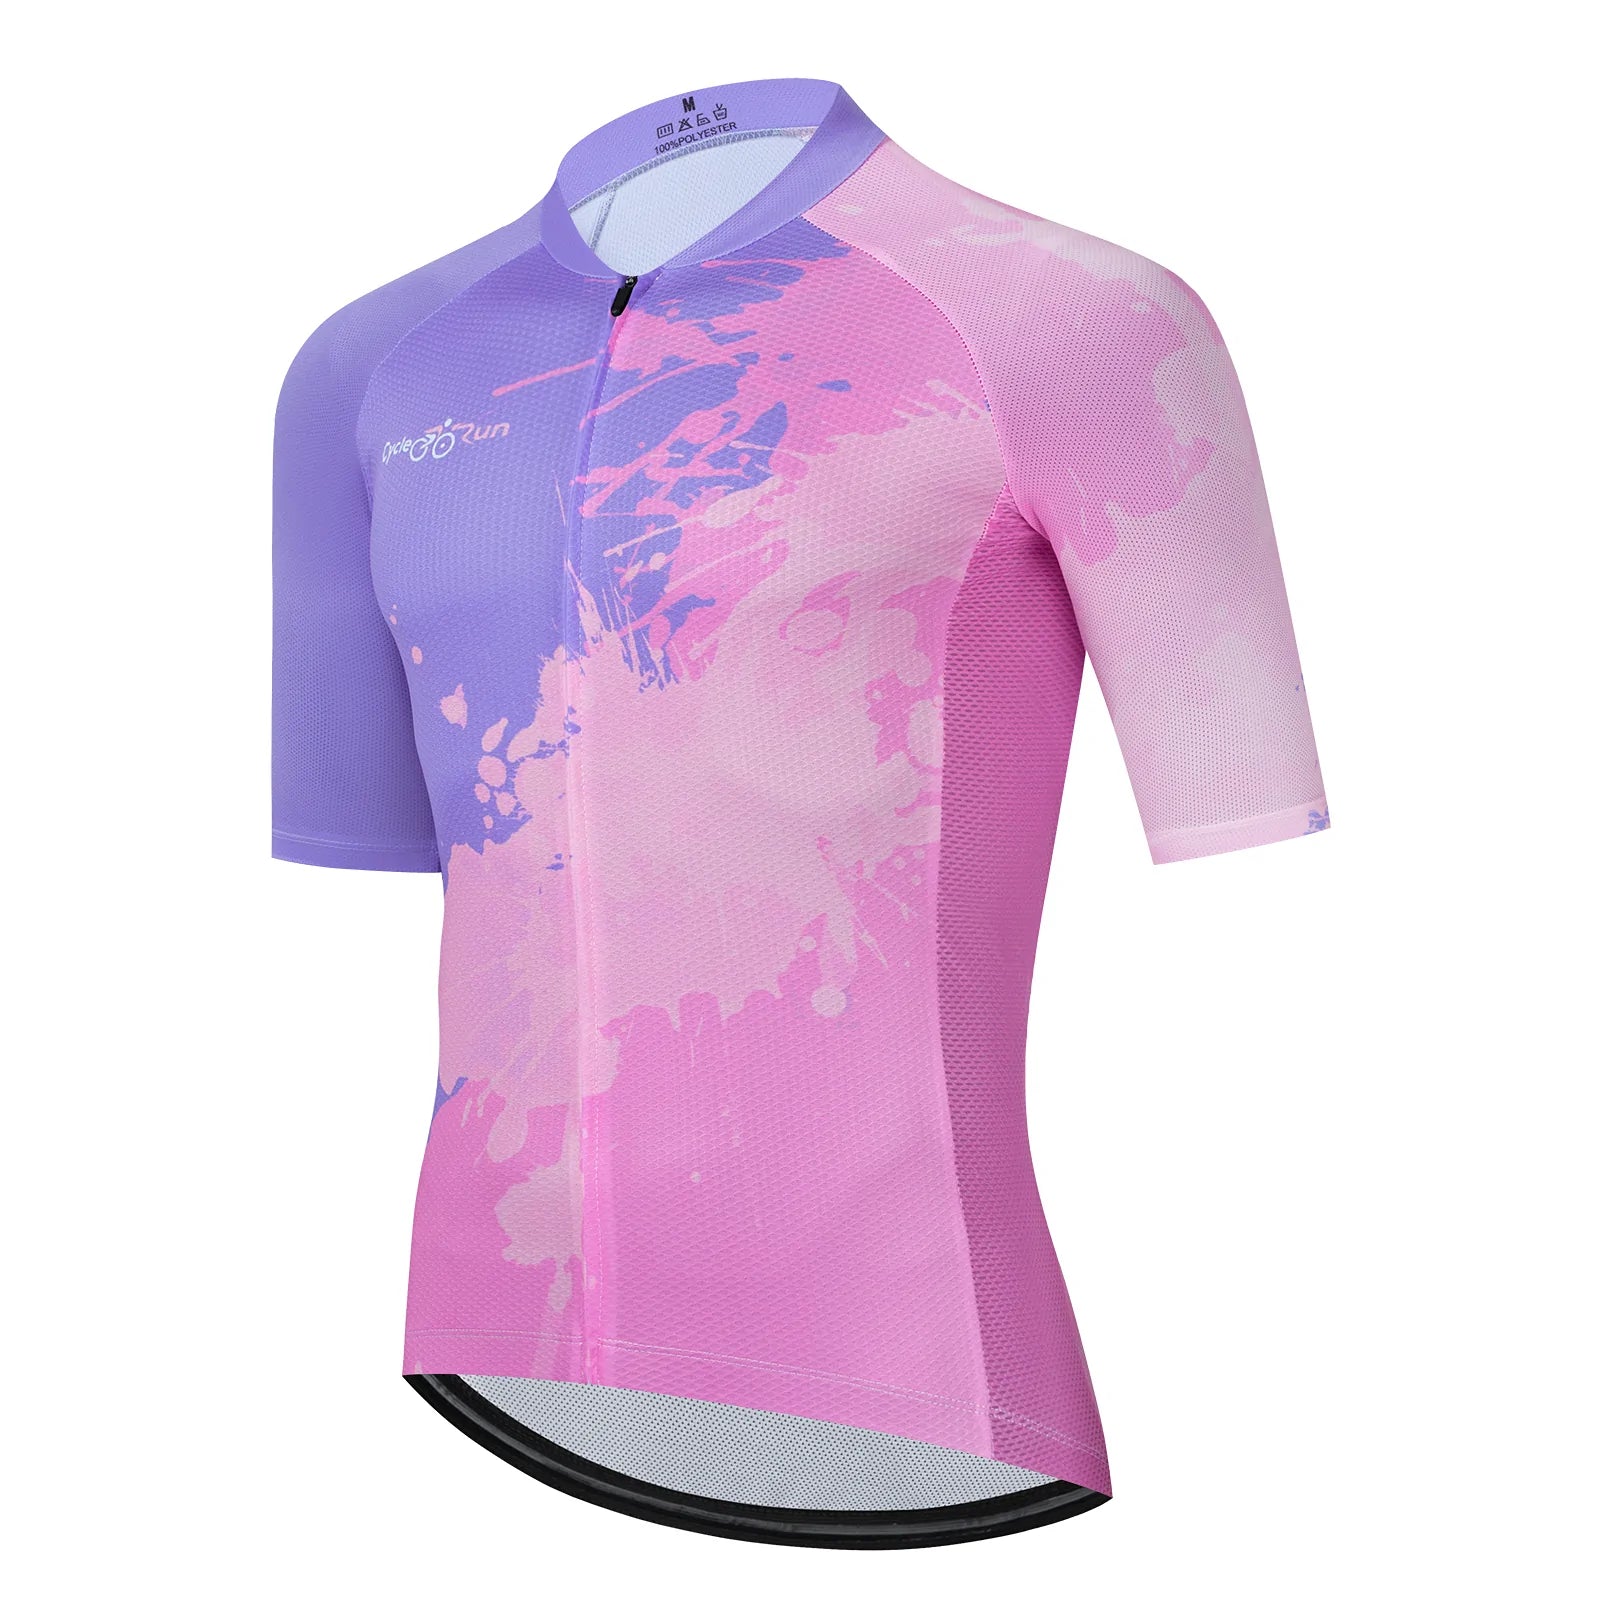 Blue paint splash cycling jersey for women